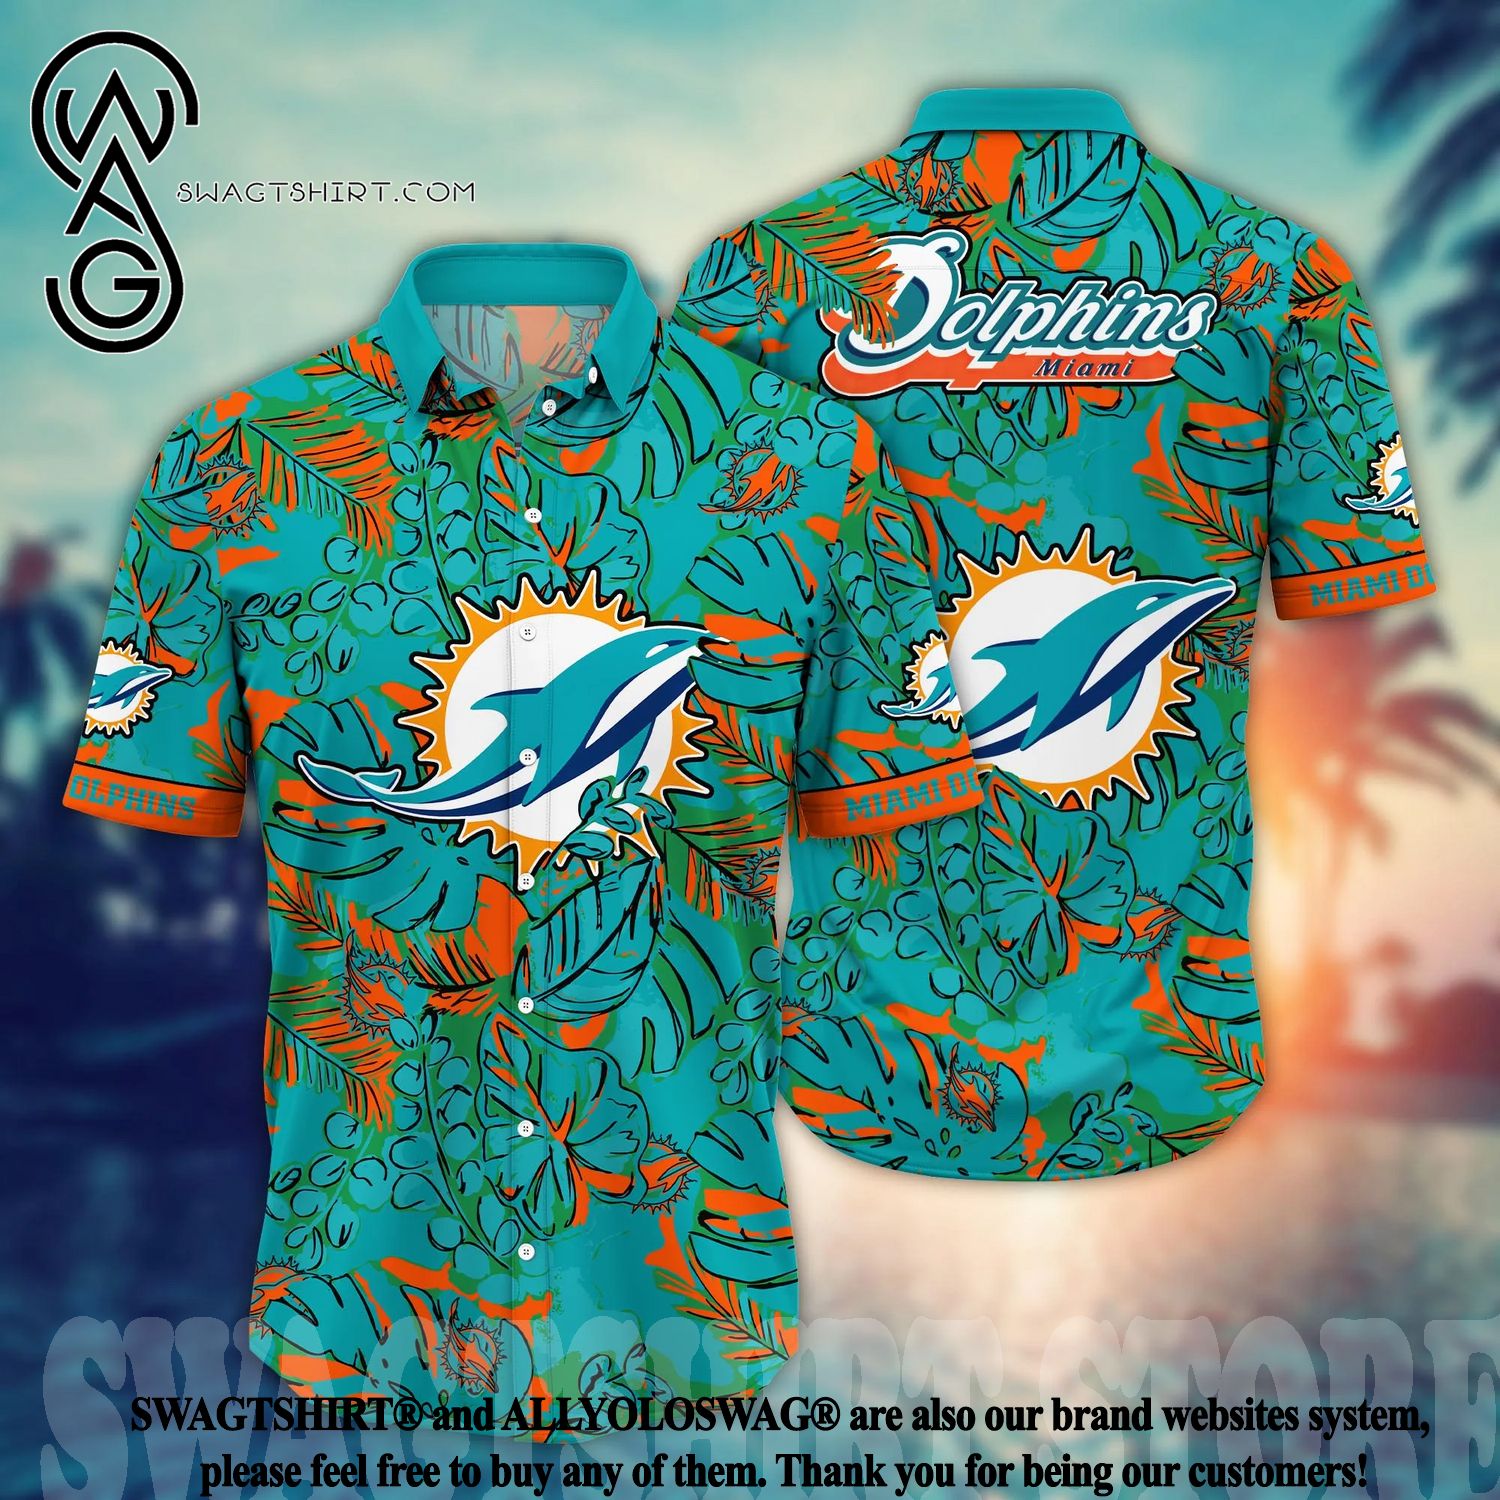 NFL Miami Dolphins Grateful Dead Hawaiian Shirt For Fans